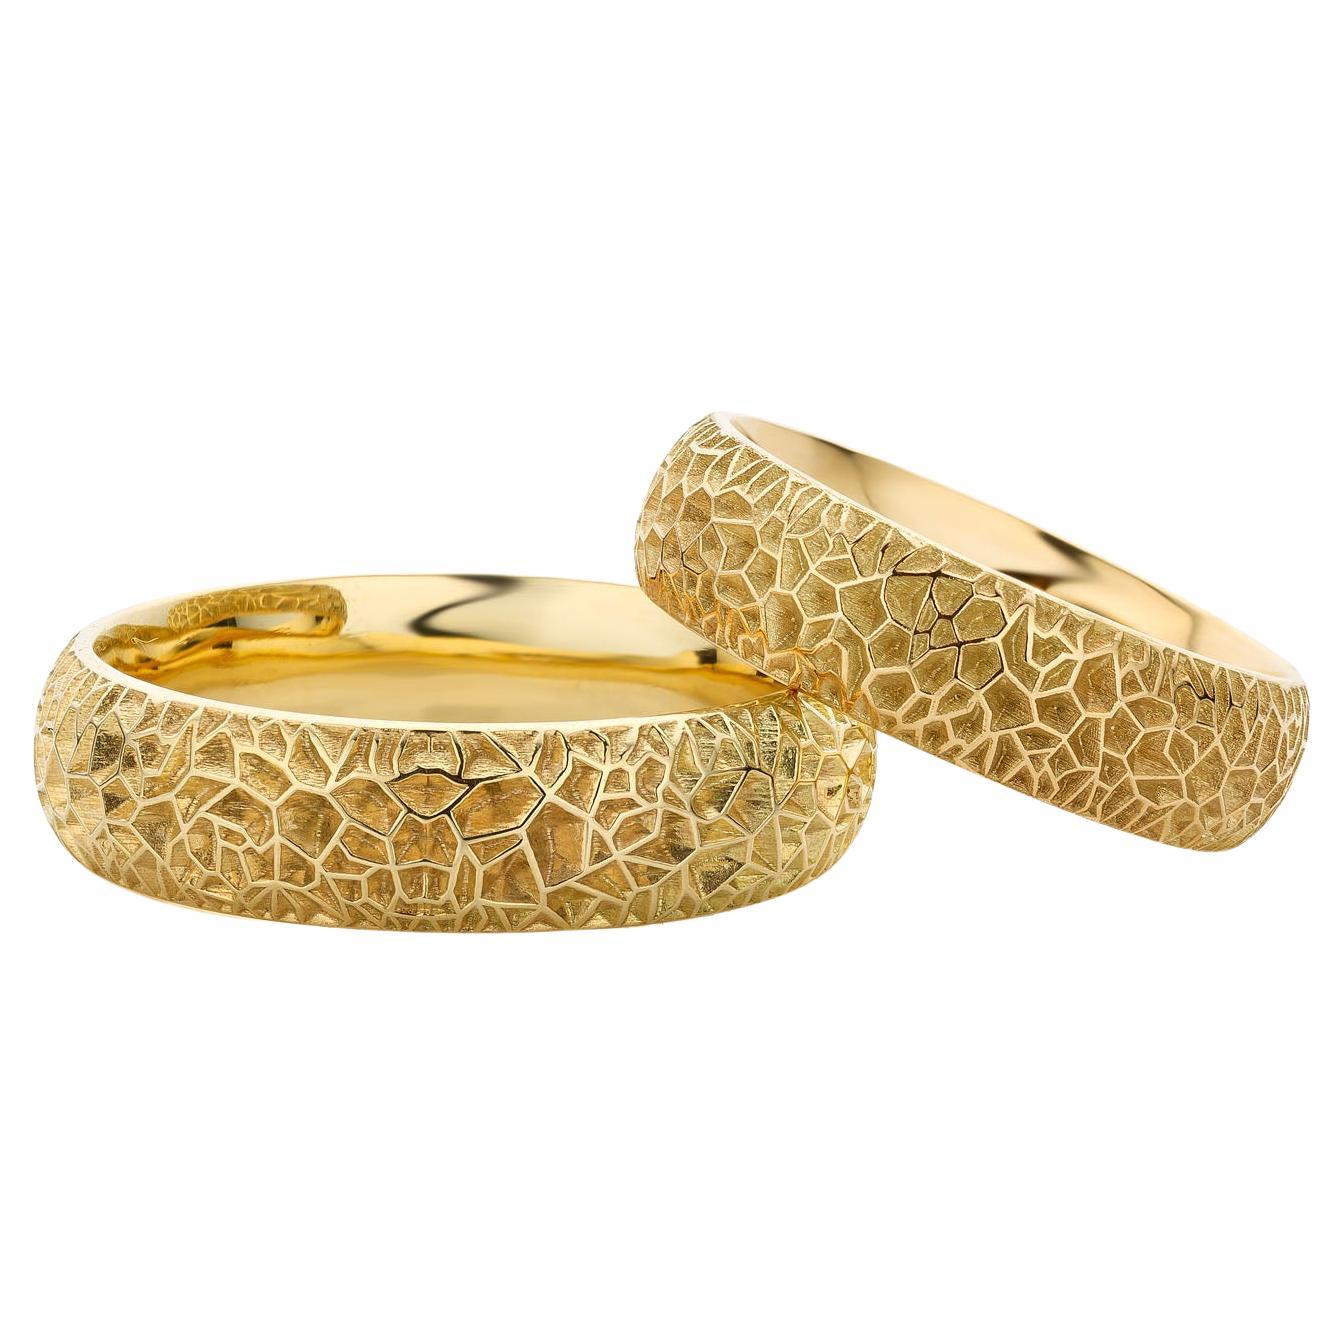 Cober Jewellery “Desert Footsteps” 14 Karat Yellow Gold Wedding Rings